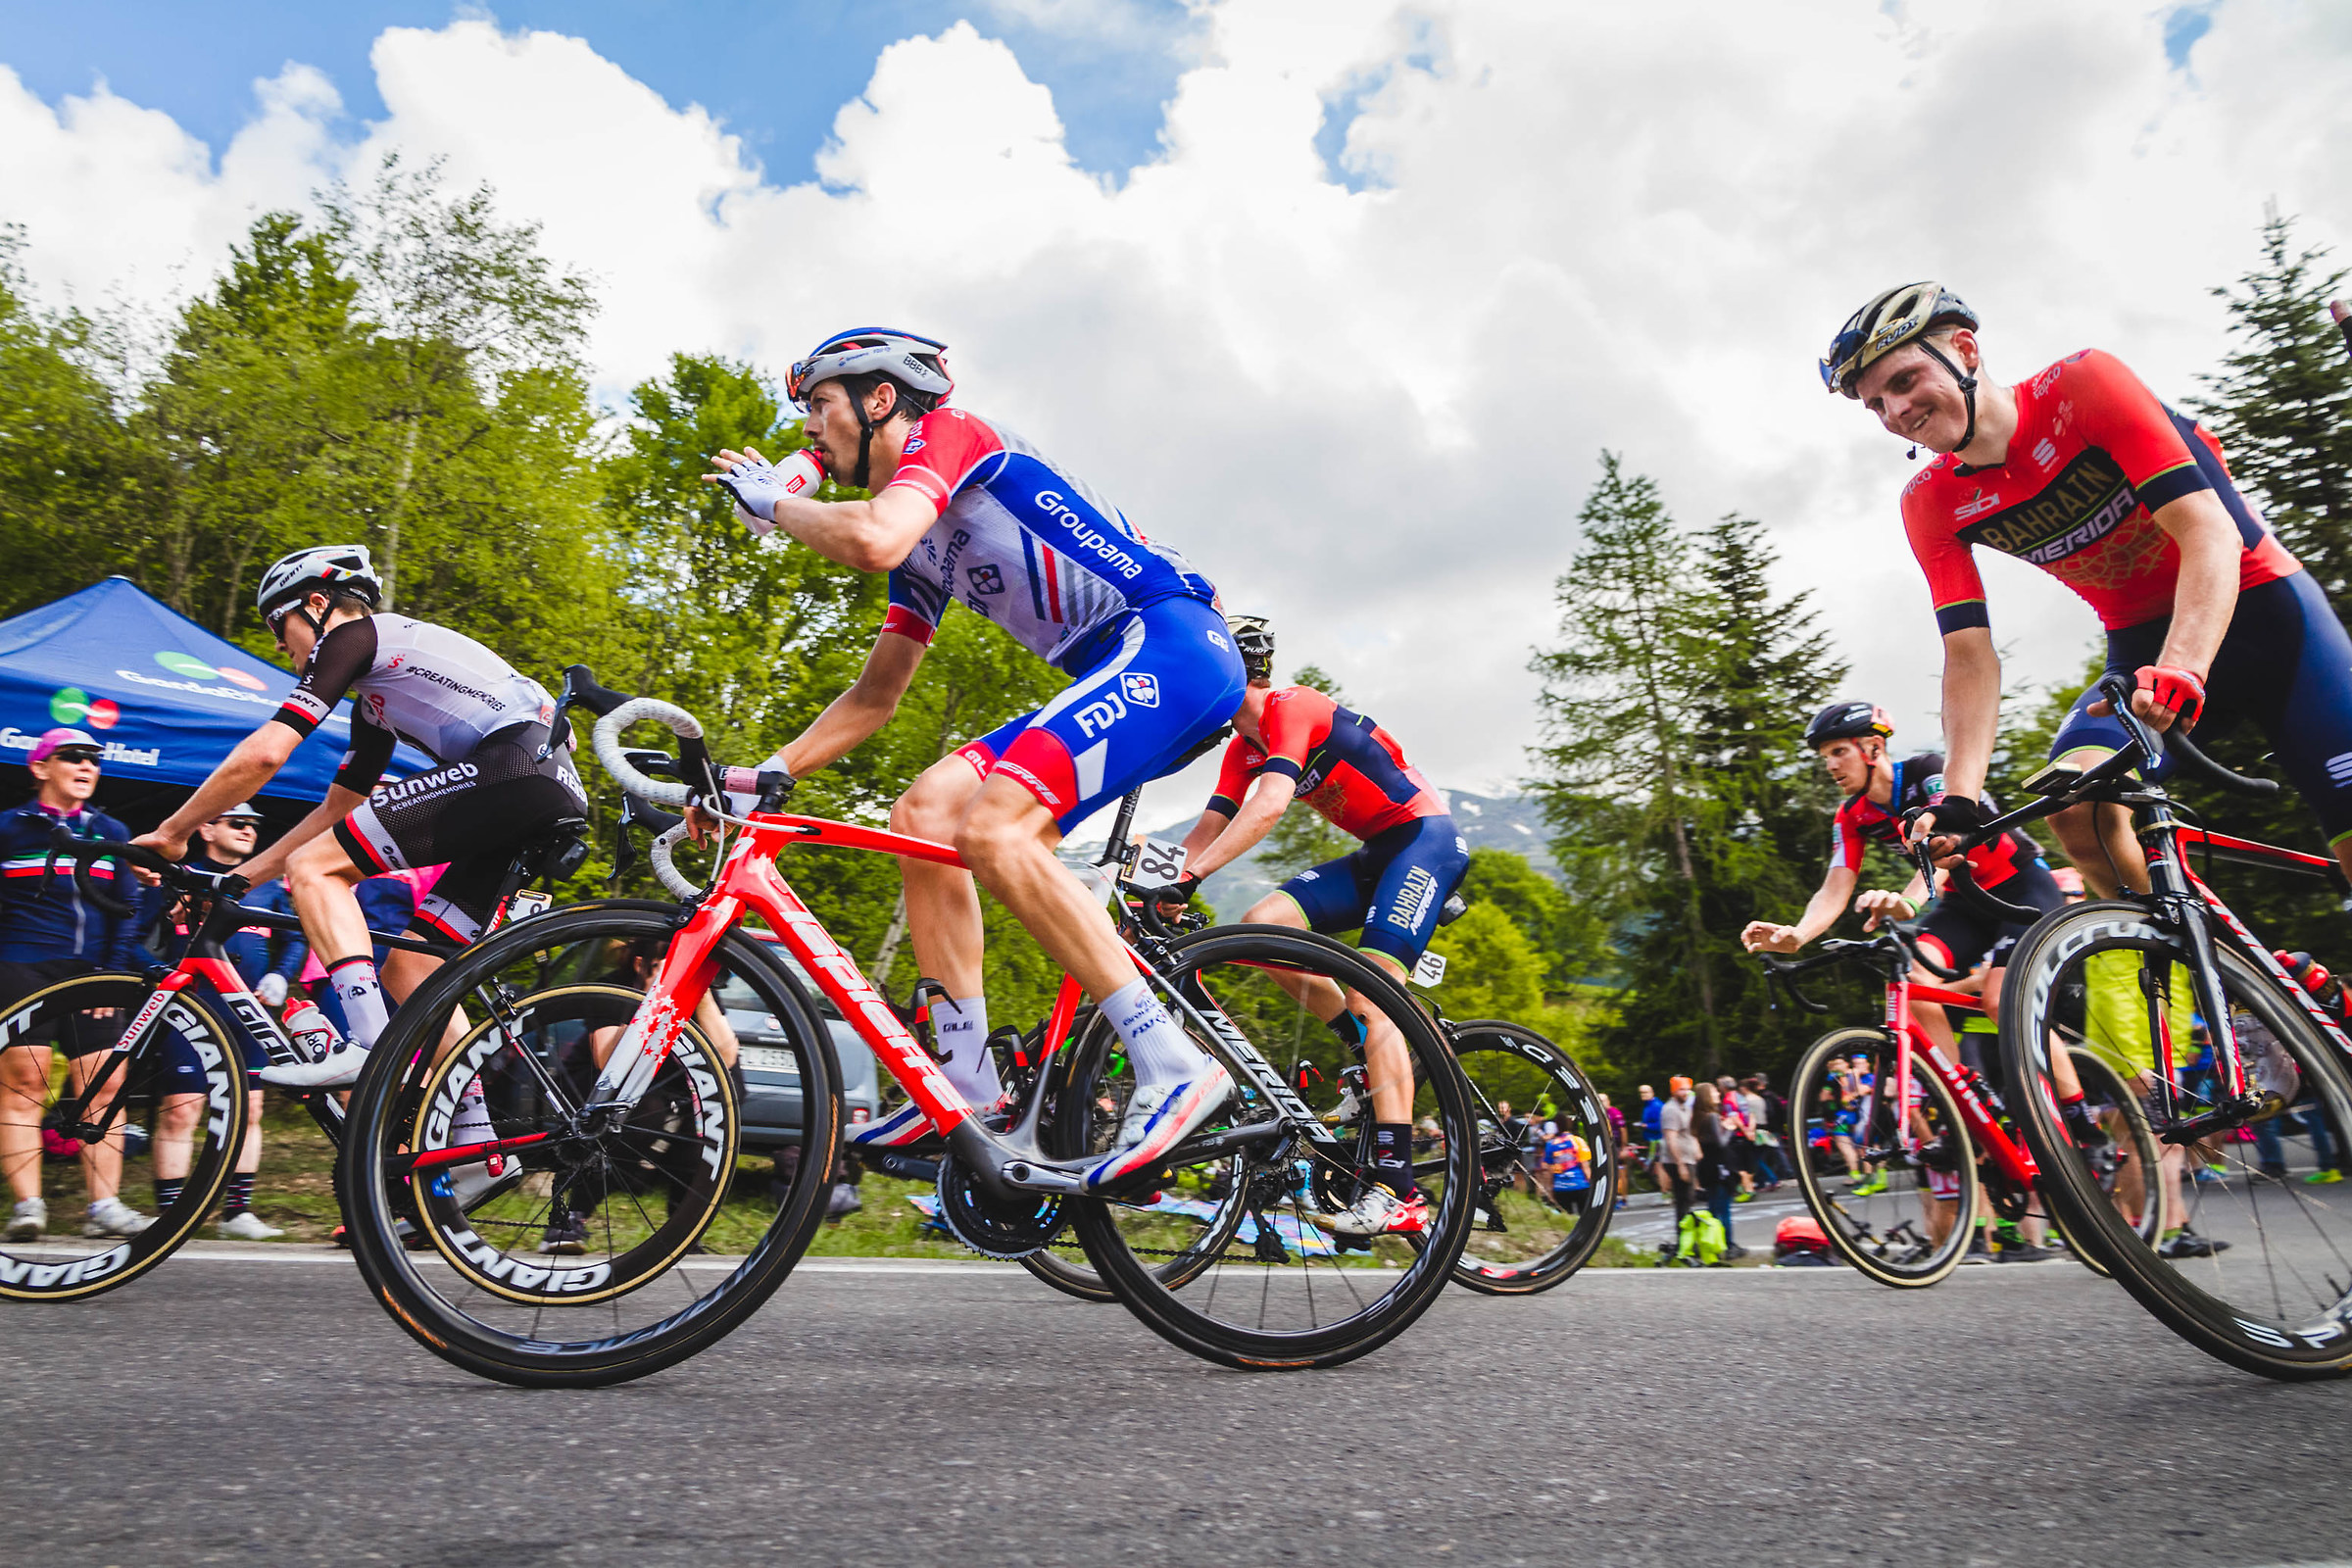 Giro d'italia 2018-Mohoric If you ride it...